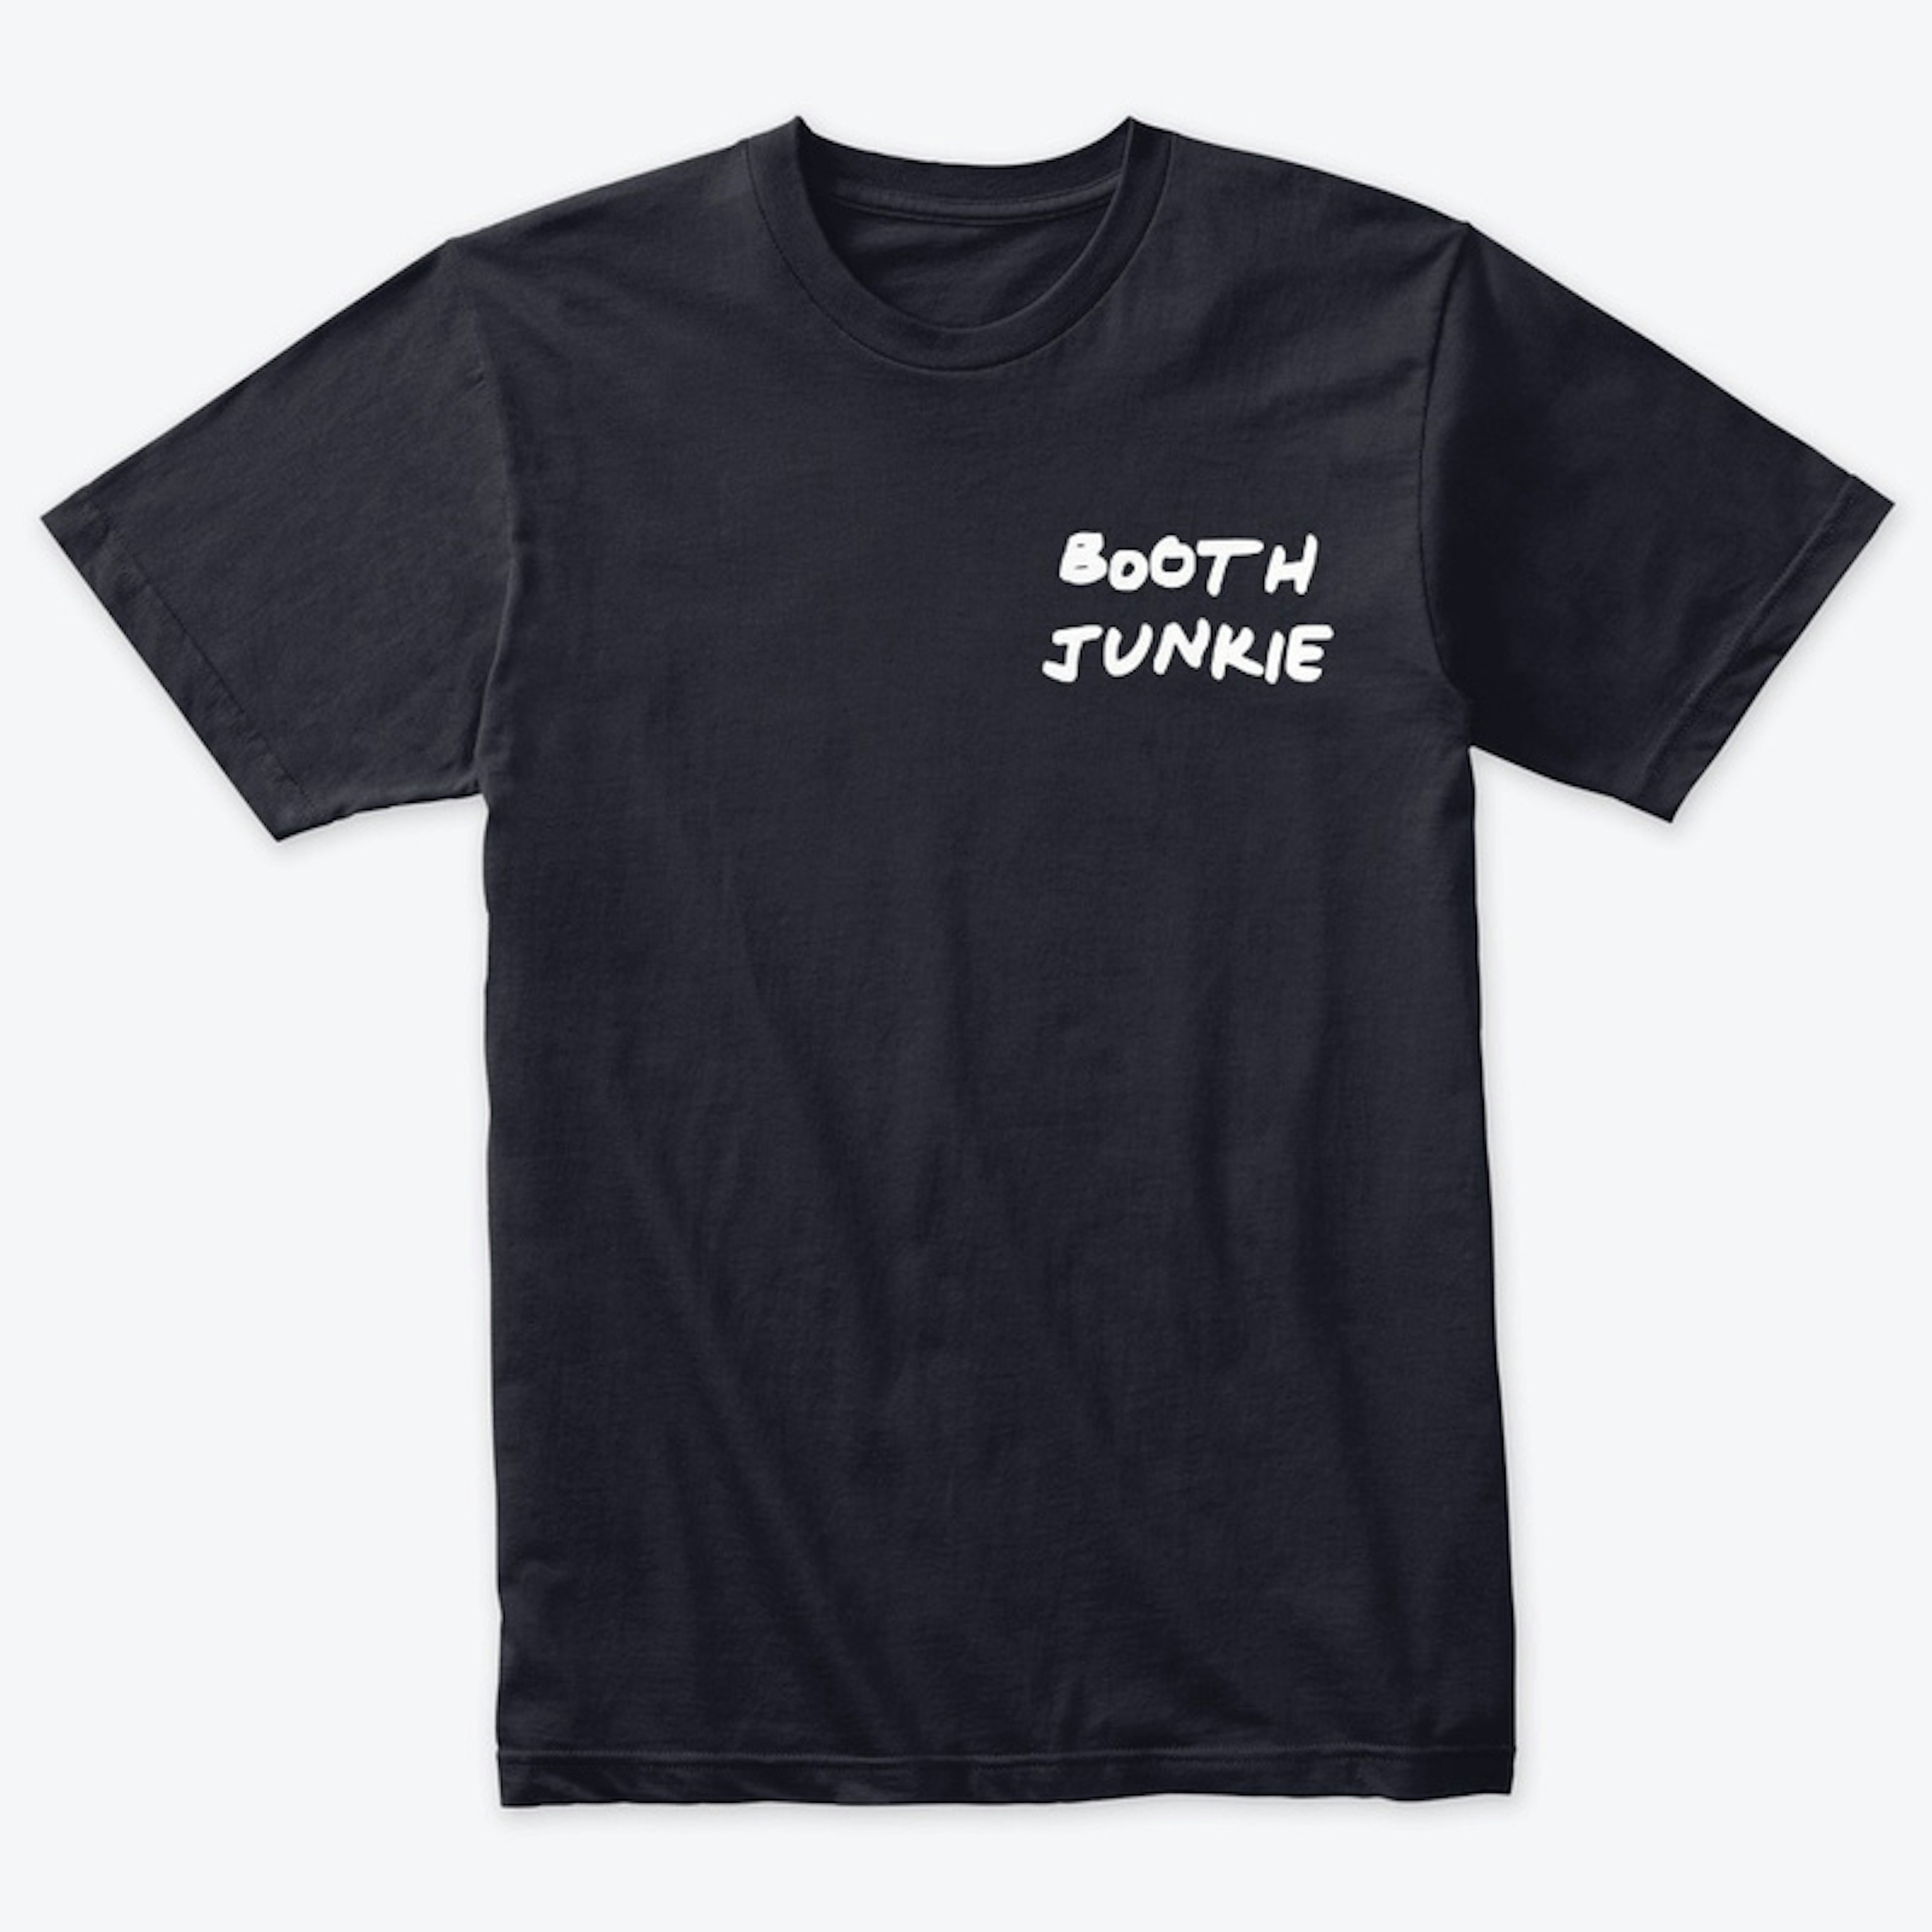 Booth Junkie Shirt